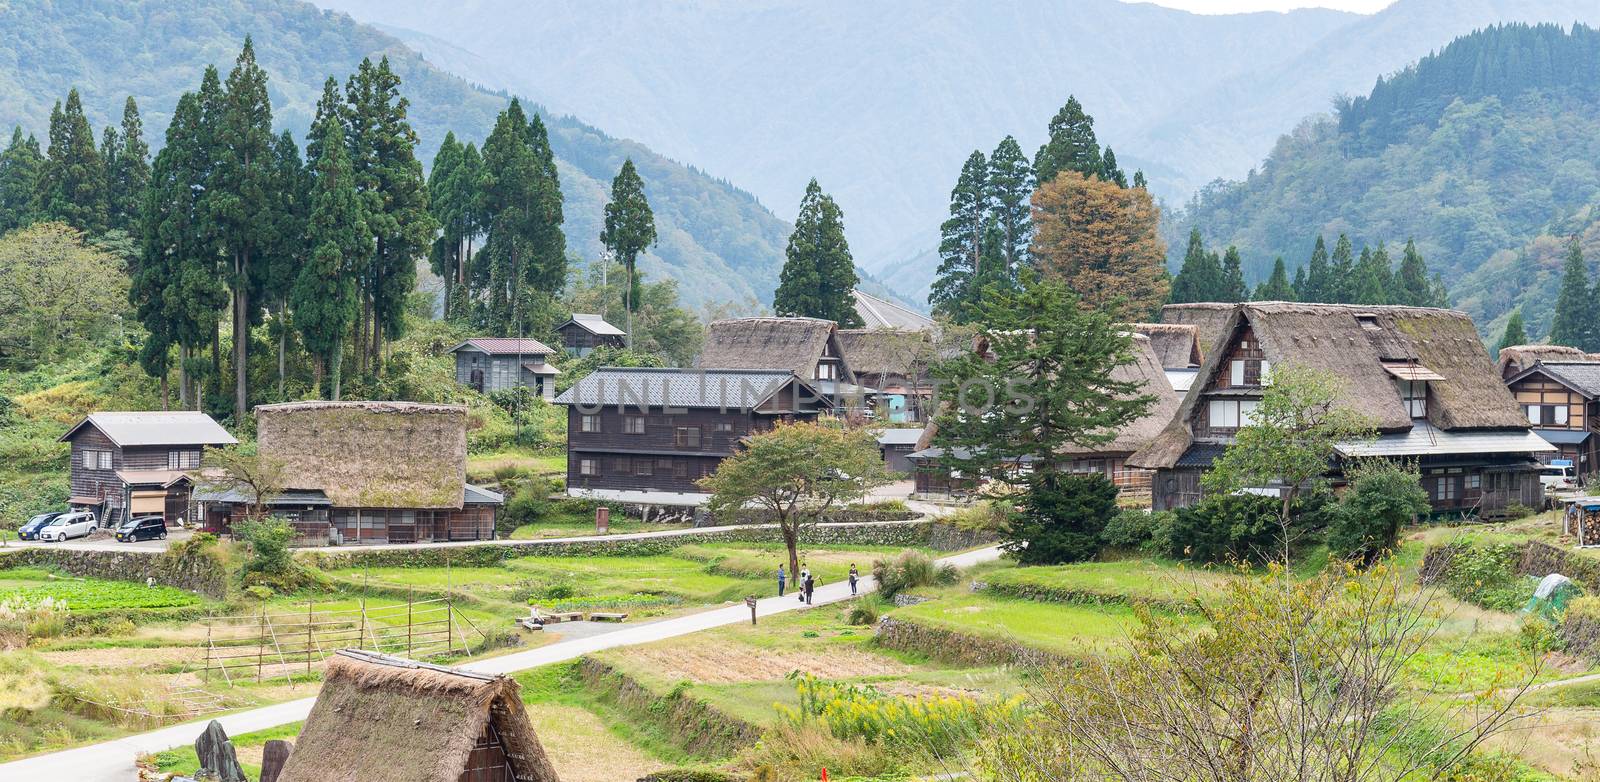 Traditional Shirakawago village by leungchopan